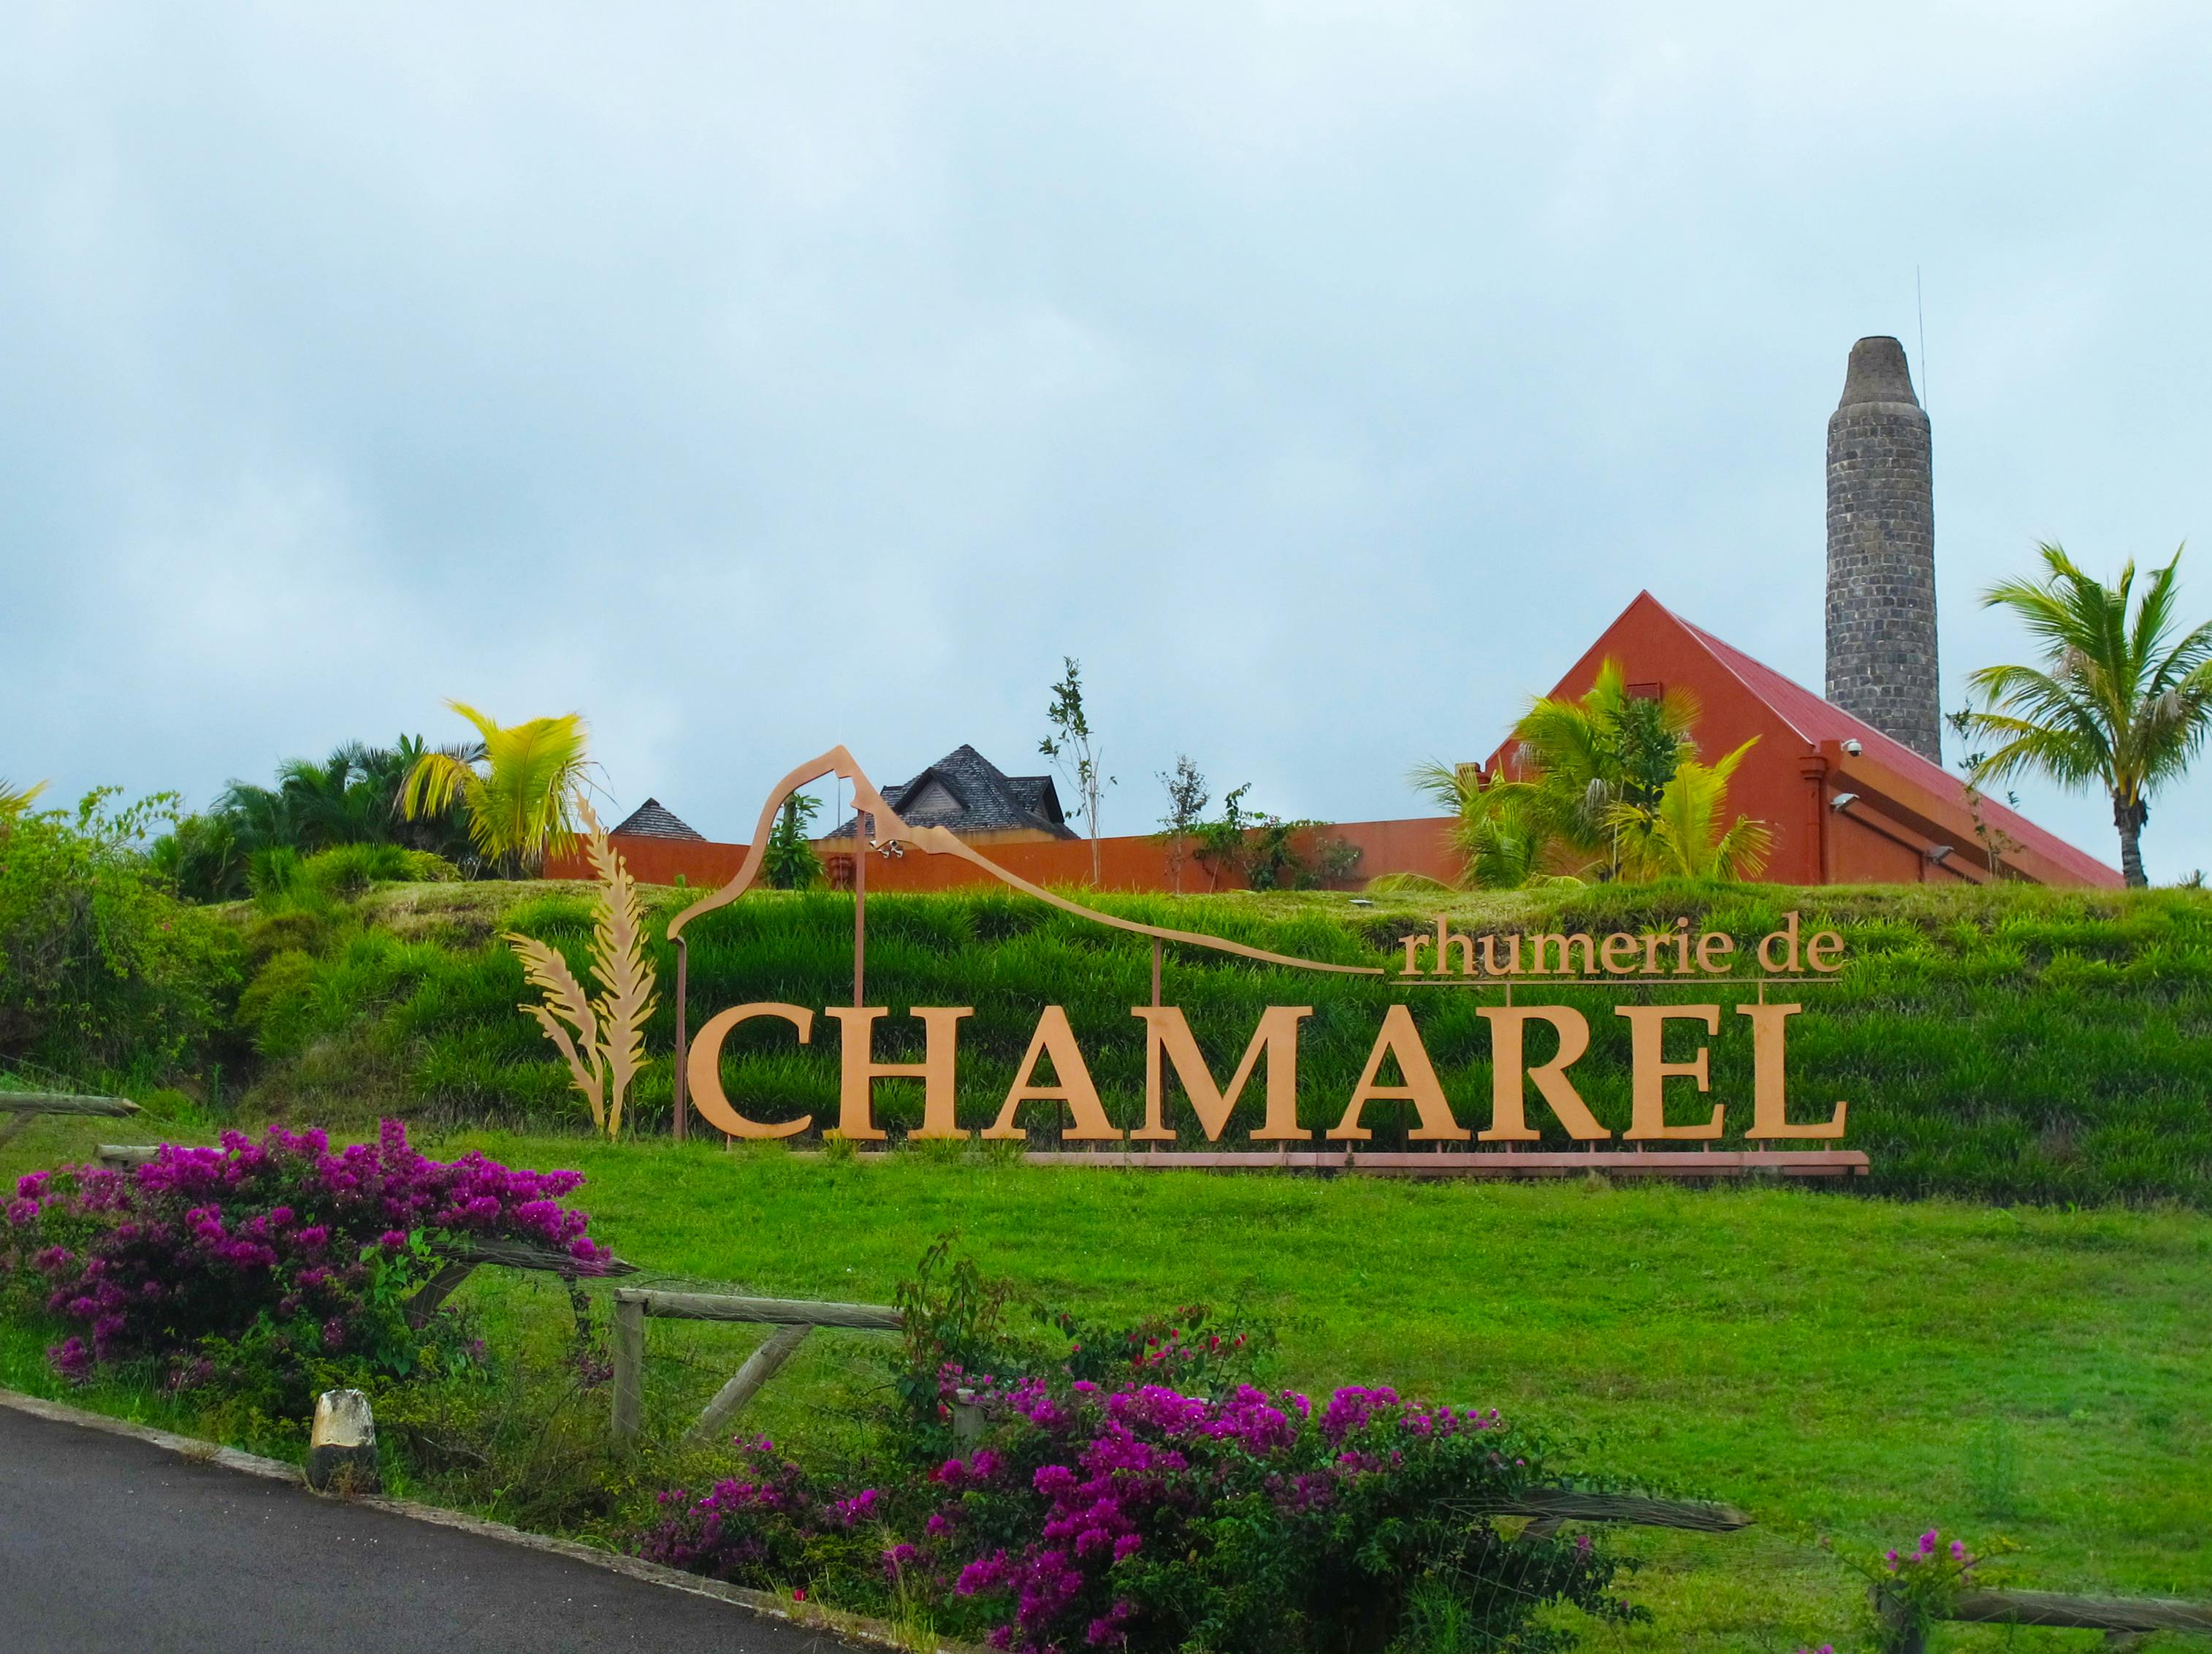 Rhumerie de Chamarel entrance ticket Musement